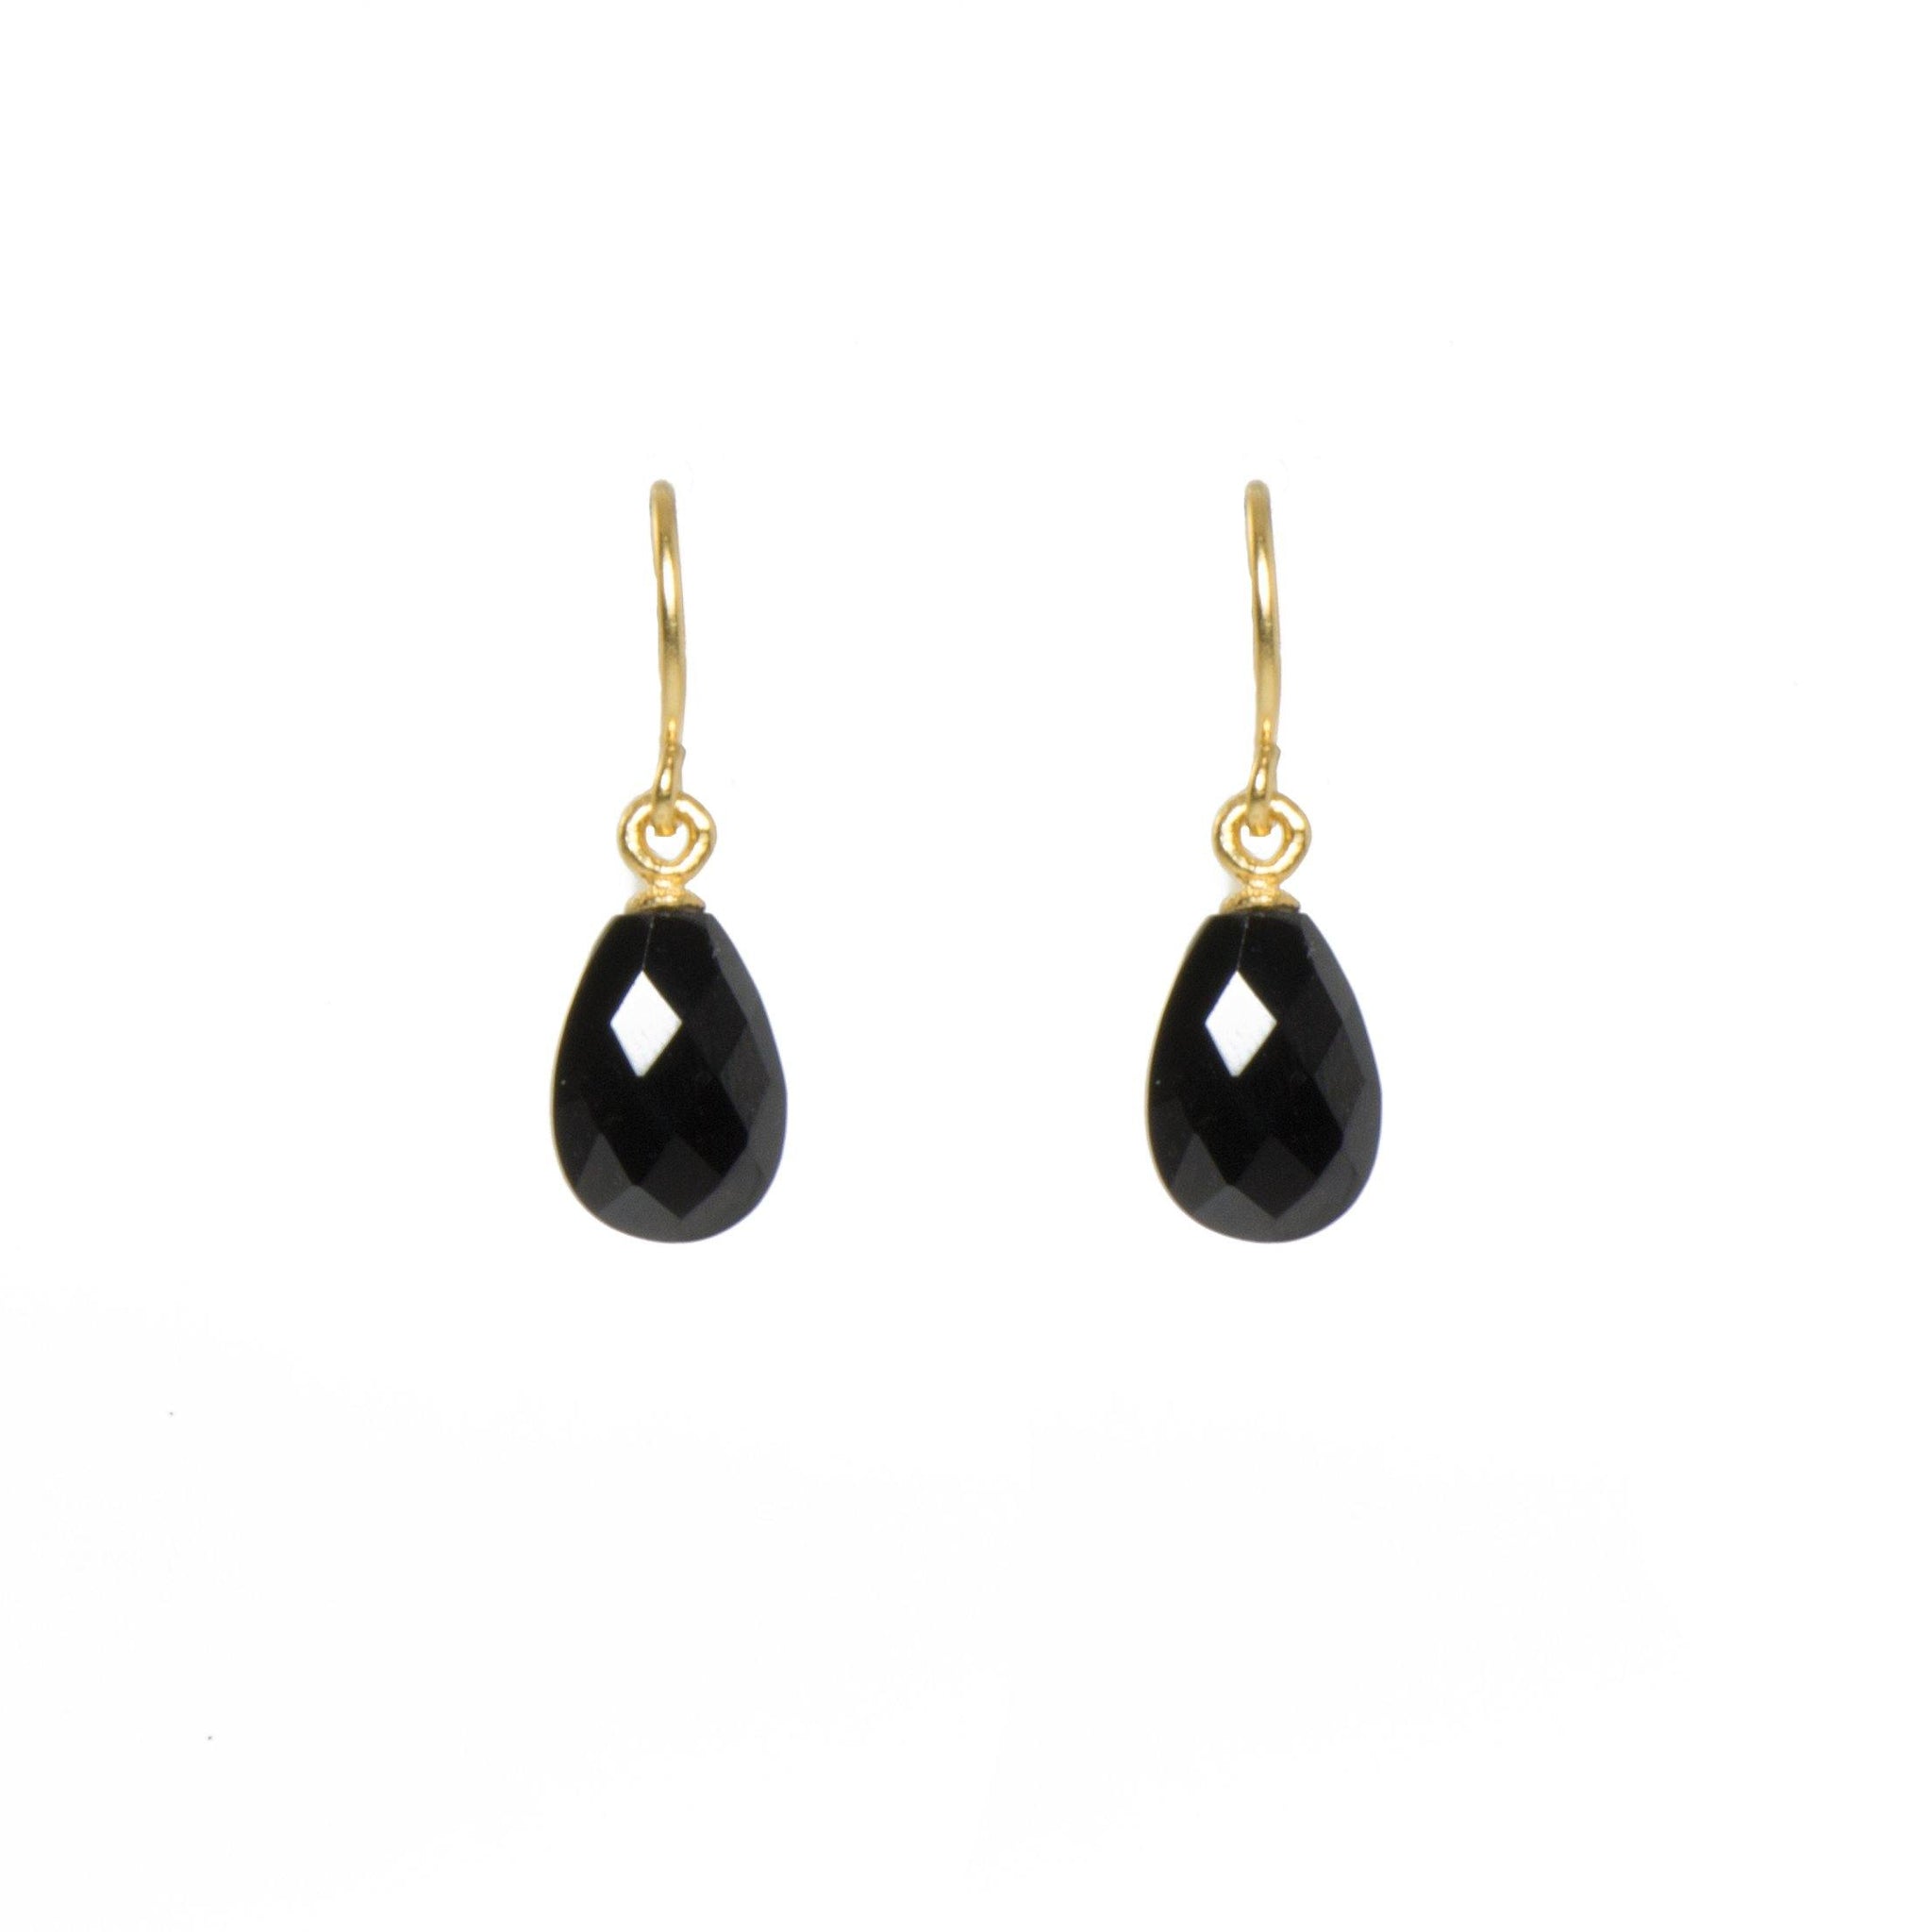 FACETED BLACK SPINEL FRENCH WIRE EARRINGS FAIR TRADE 24K GOLD VERMEIL - Joyla Jewelry